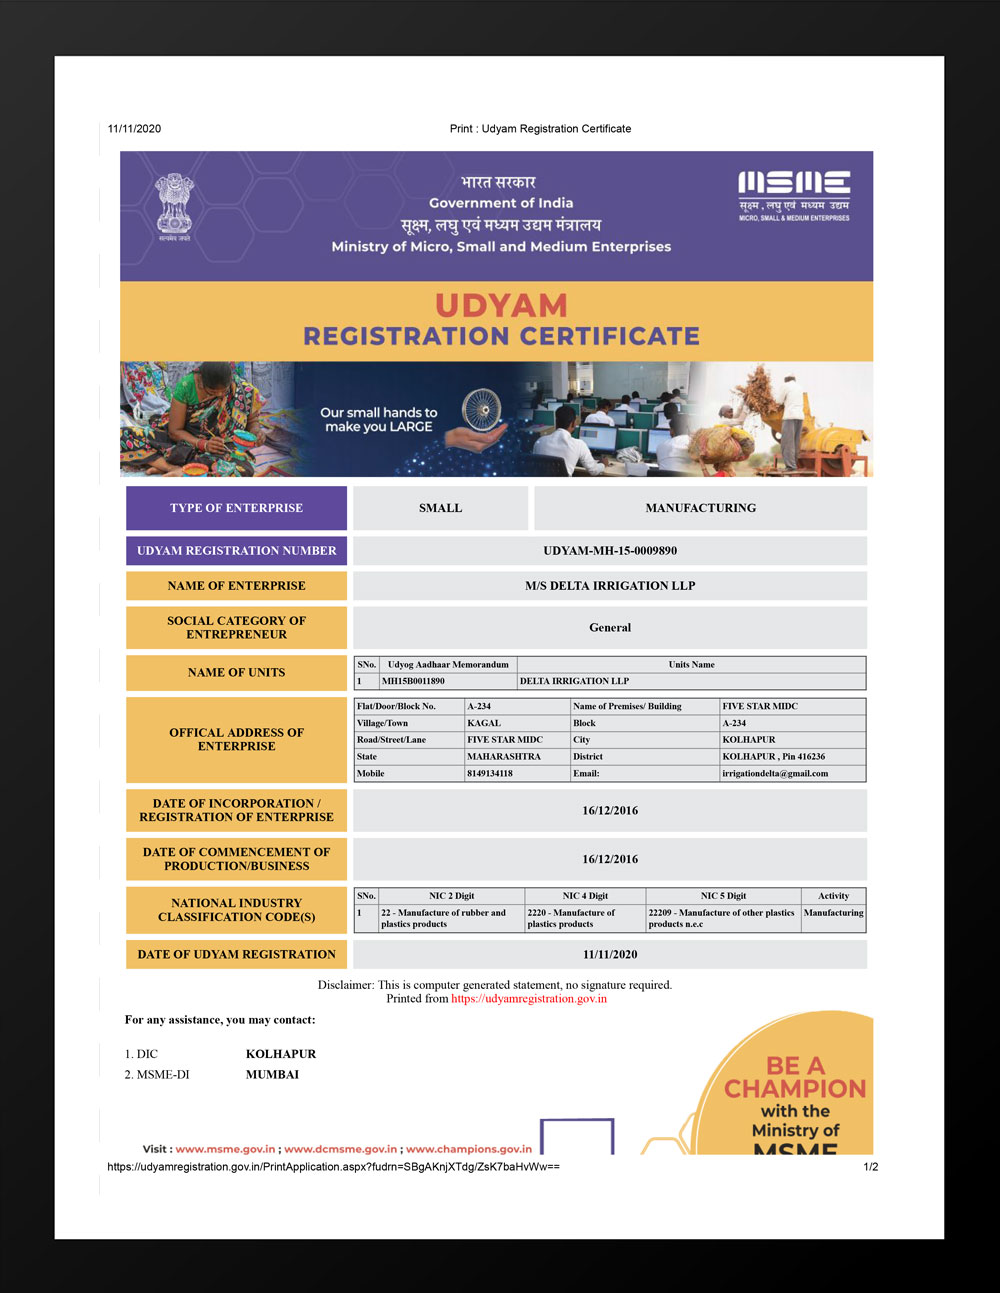 Udyam Registration Certificate Delta Irrigation LLP